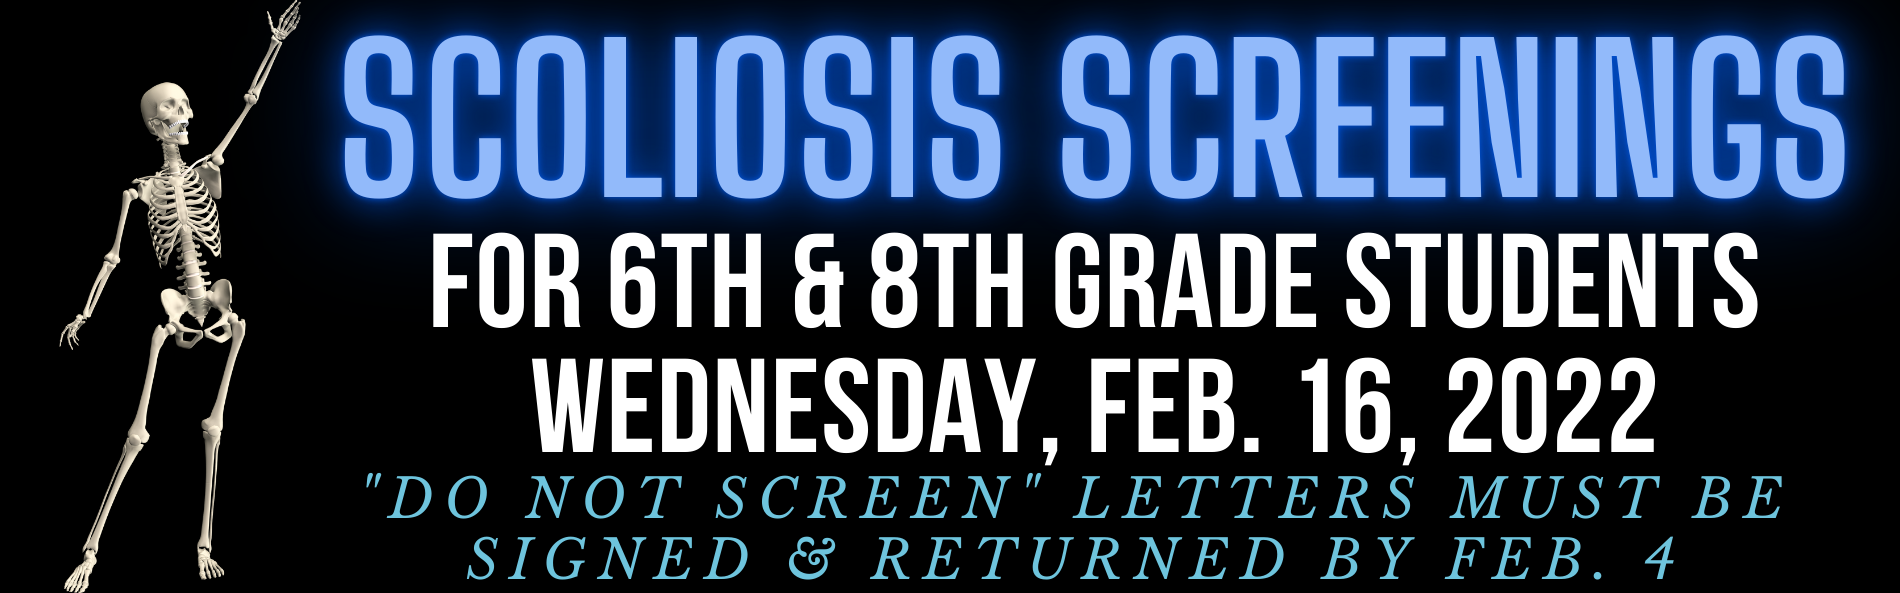 Scoliosis Screening Feb. 17th